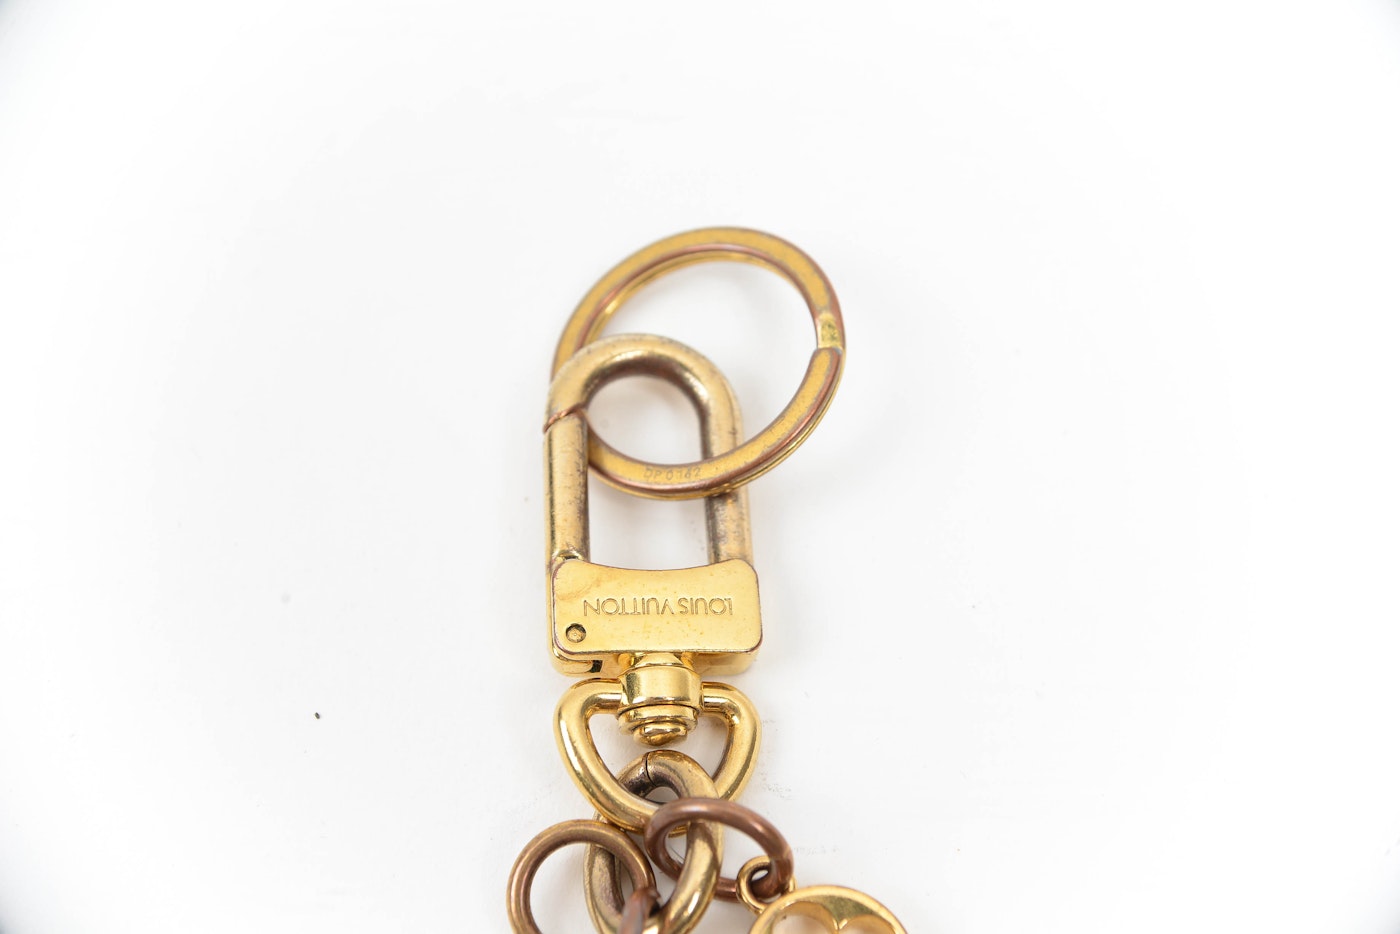 Louis Vuitton Hotel Keychain 101 Champs-Elysees Paris in Gold Tones | EBTH